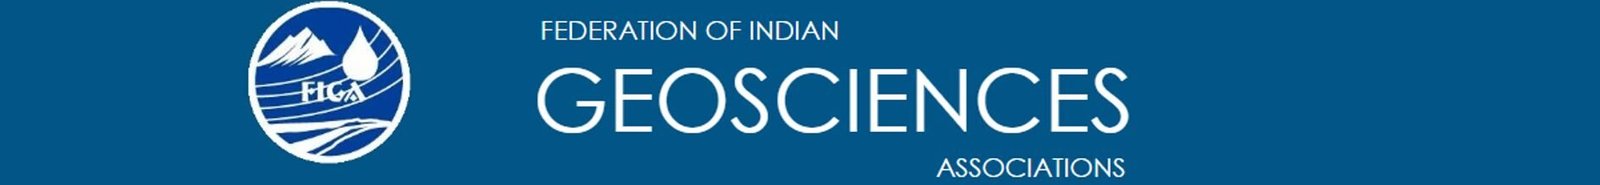 FIGA – Federation of Indian Geosciences Associations